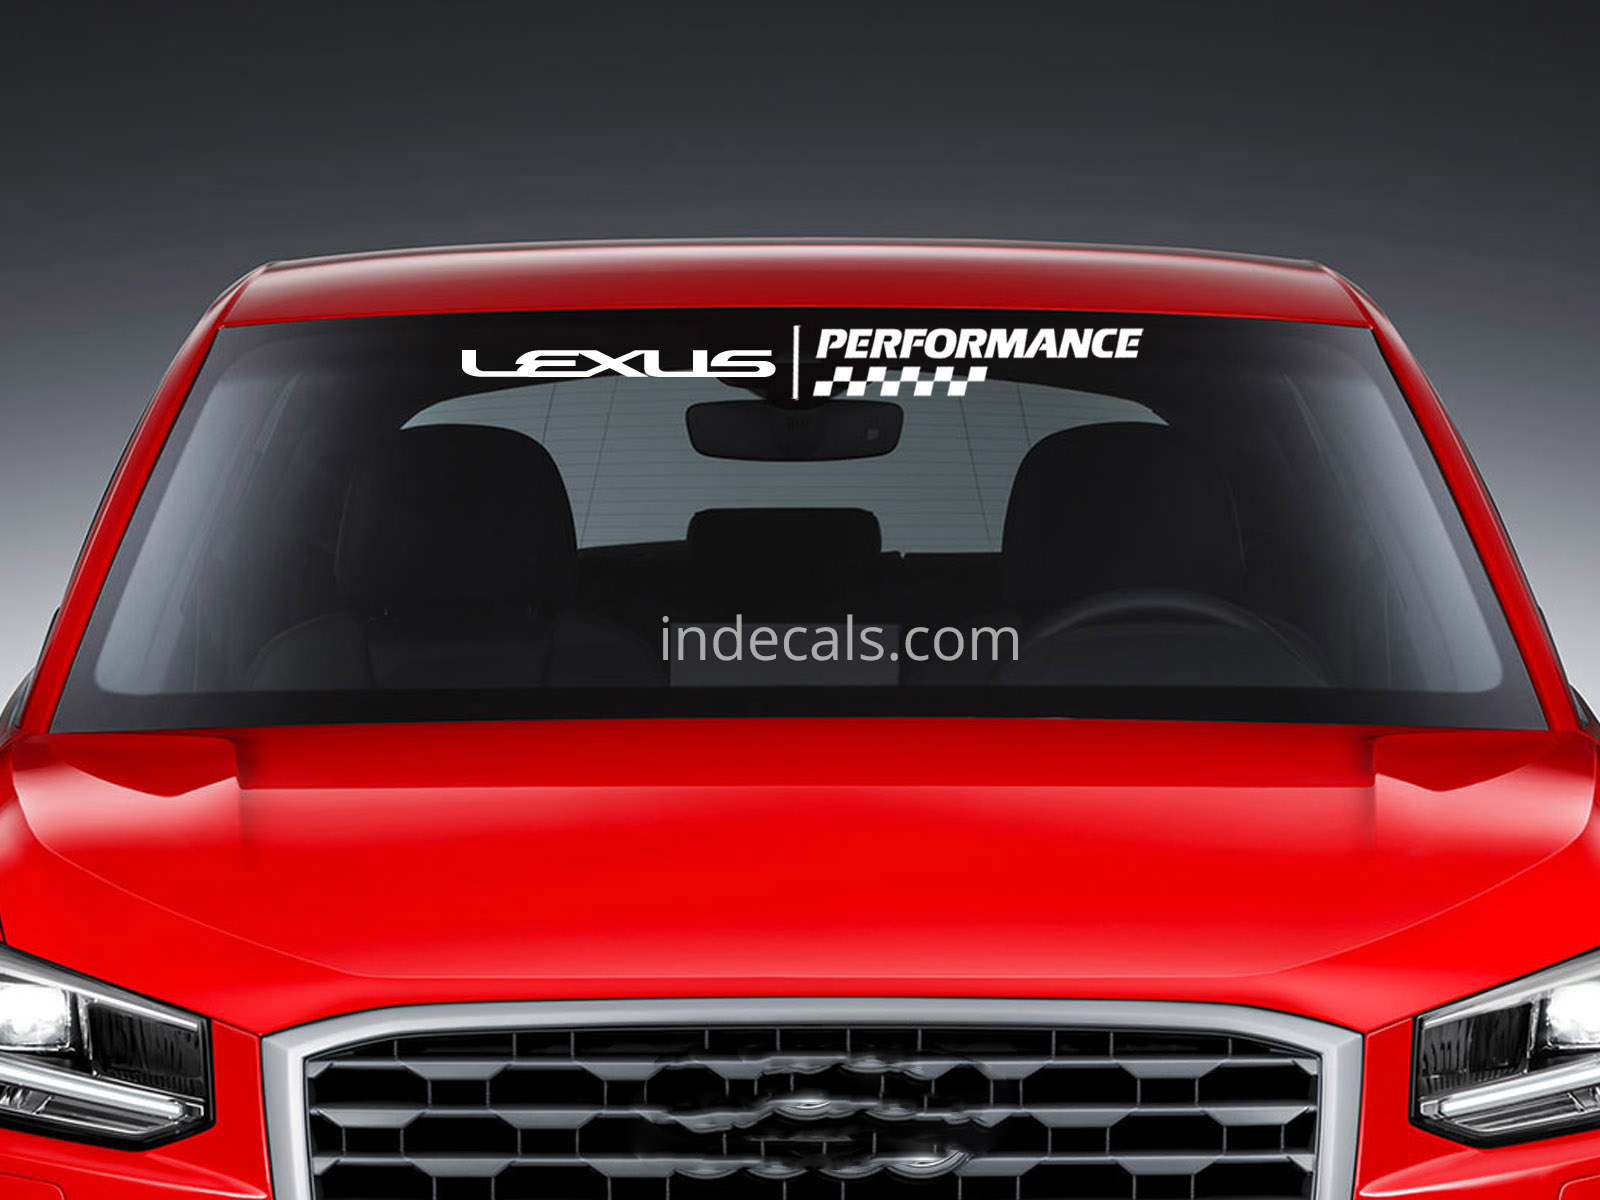 1 x Lexus Performance Sticker for Windshield or Back Window - White